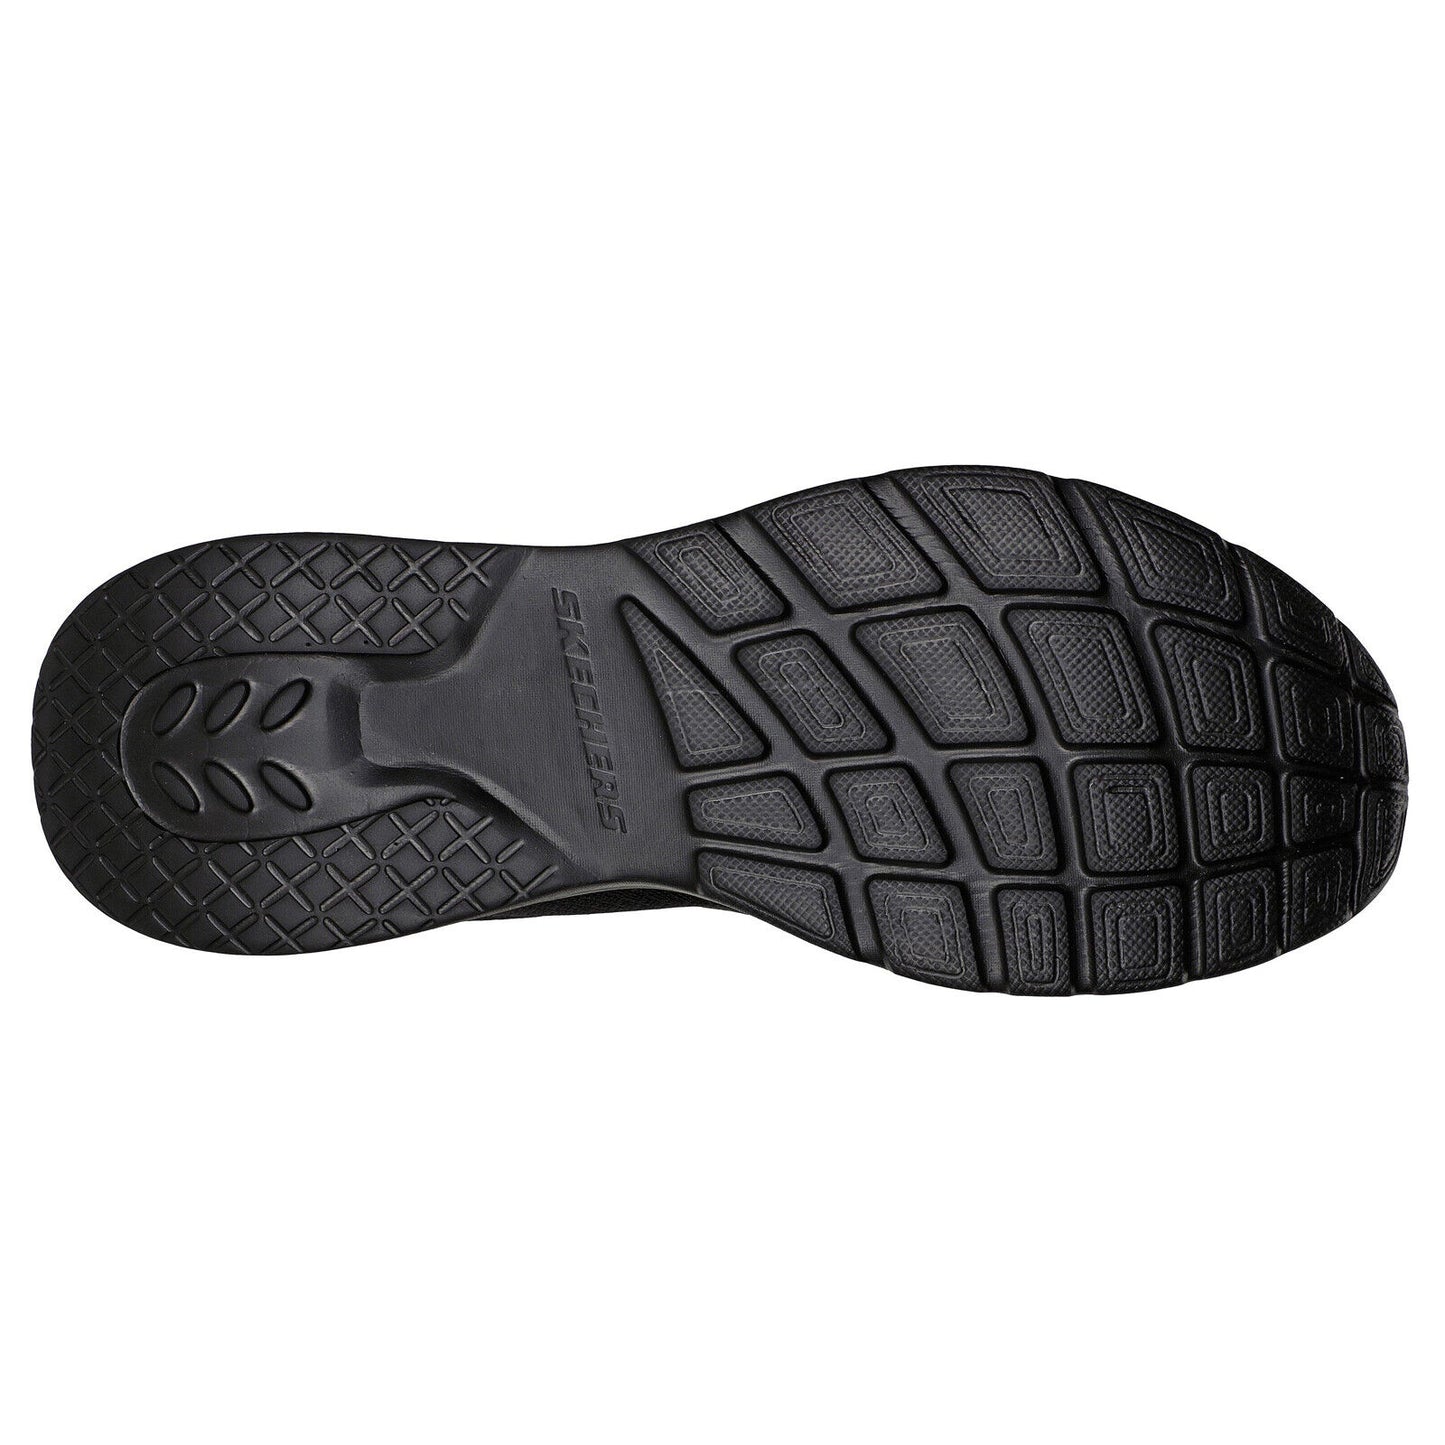 Skechers Mens Dynamite 2.0 Setner Black Slip On Lightweight Vegan Trainers Shoes